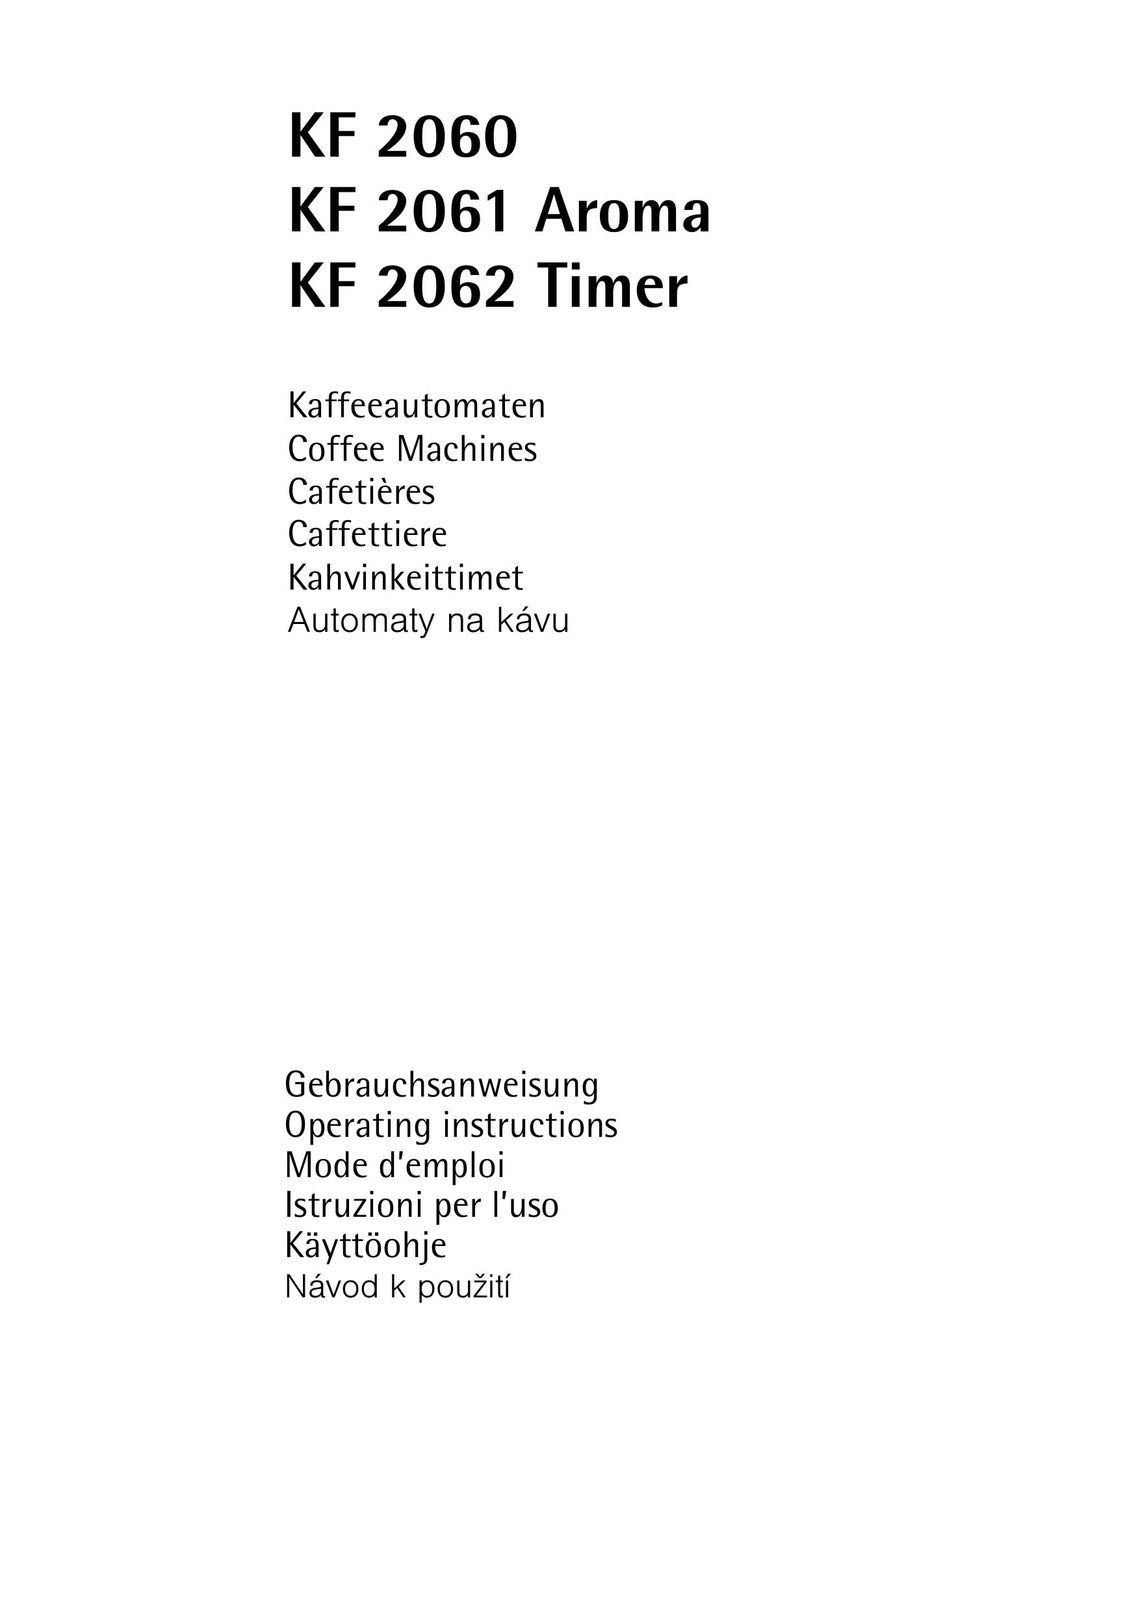 AEG KF 2060 Coffeemaker User Manual